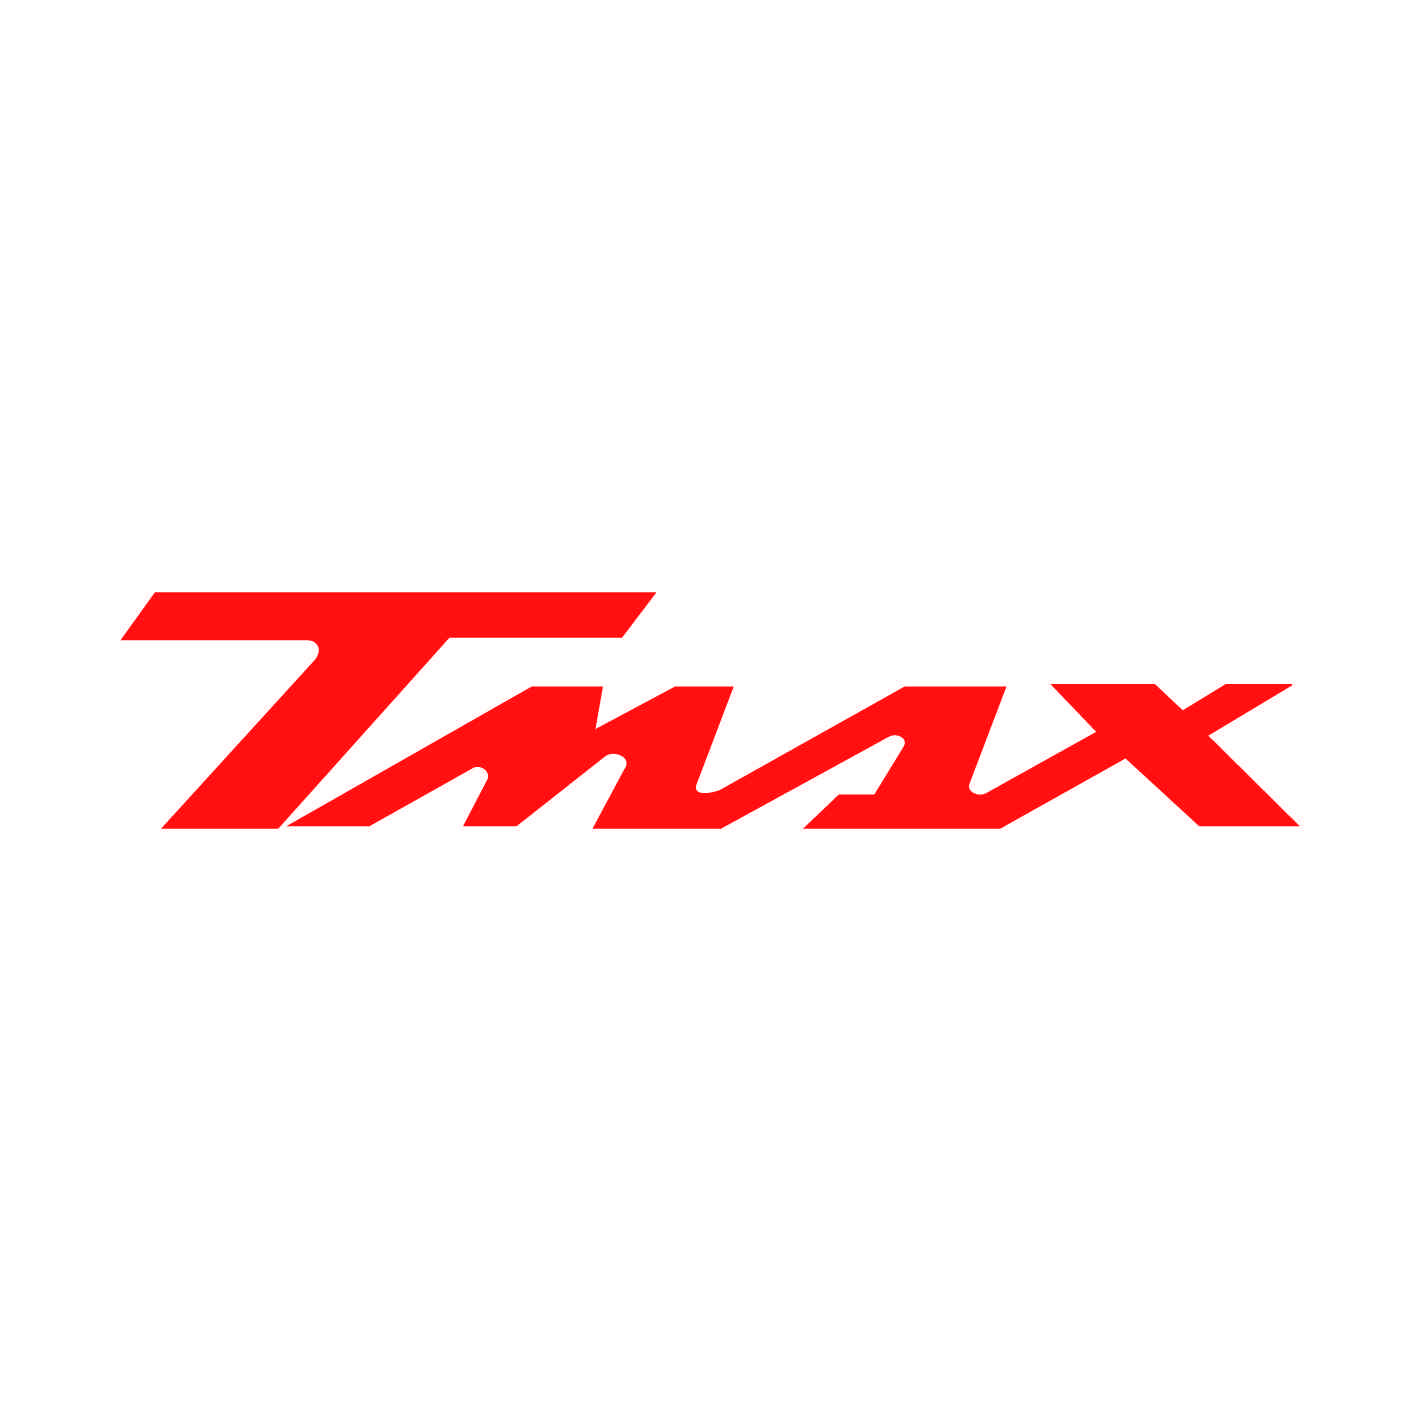 yamaha-ref17-tmax-stickers-moto-casque-scooter-sticker-autocollant-adhesifs